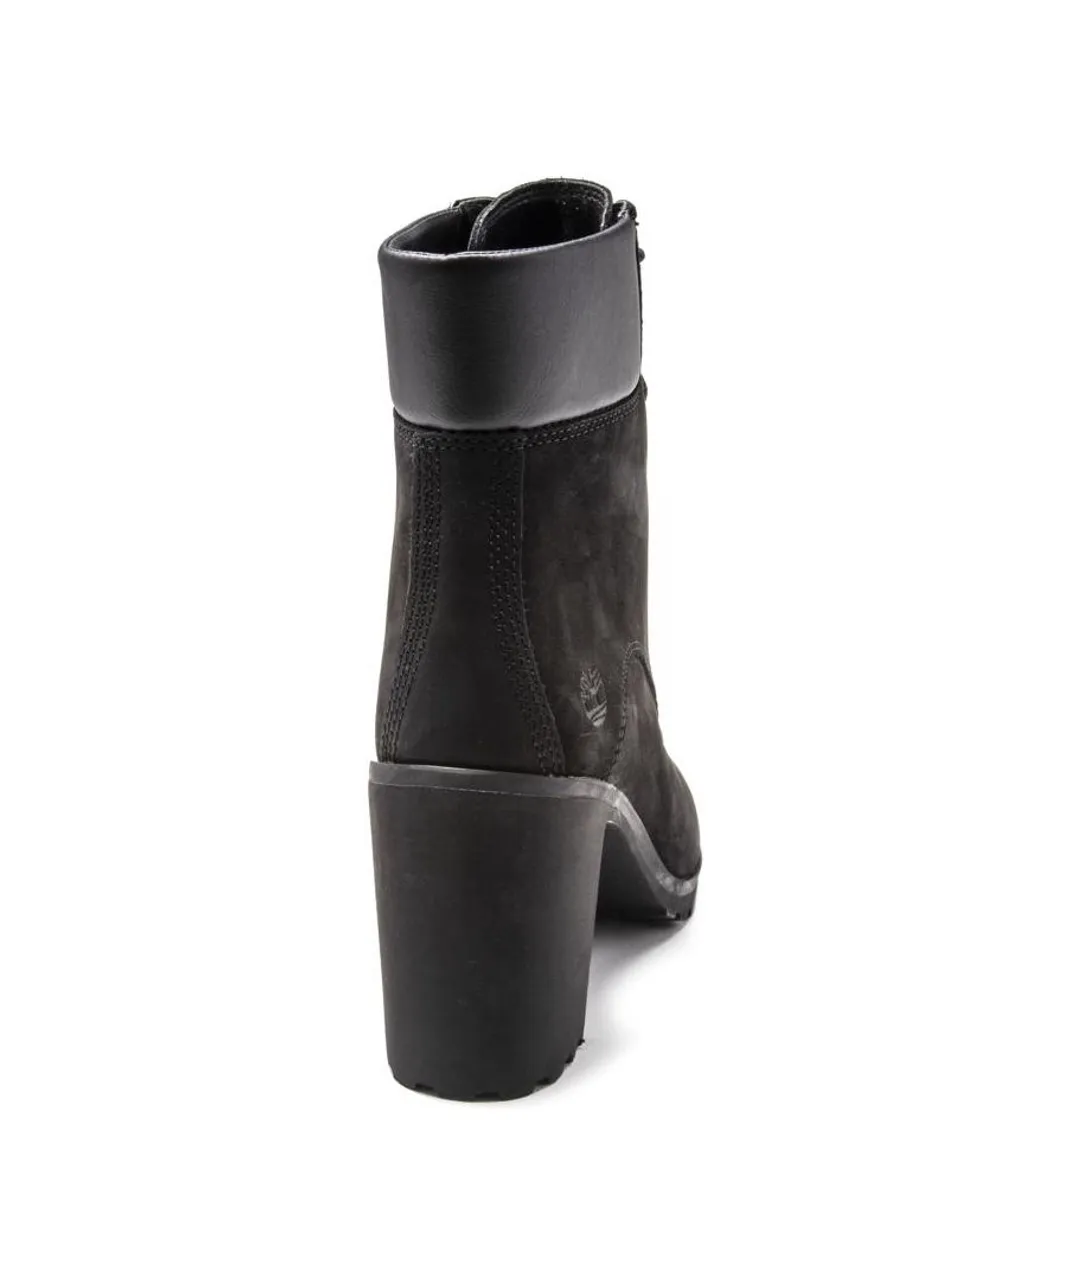 Timberland Womens Allington 6 Inch Boots - Black Nubuck